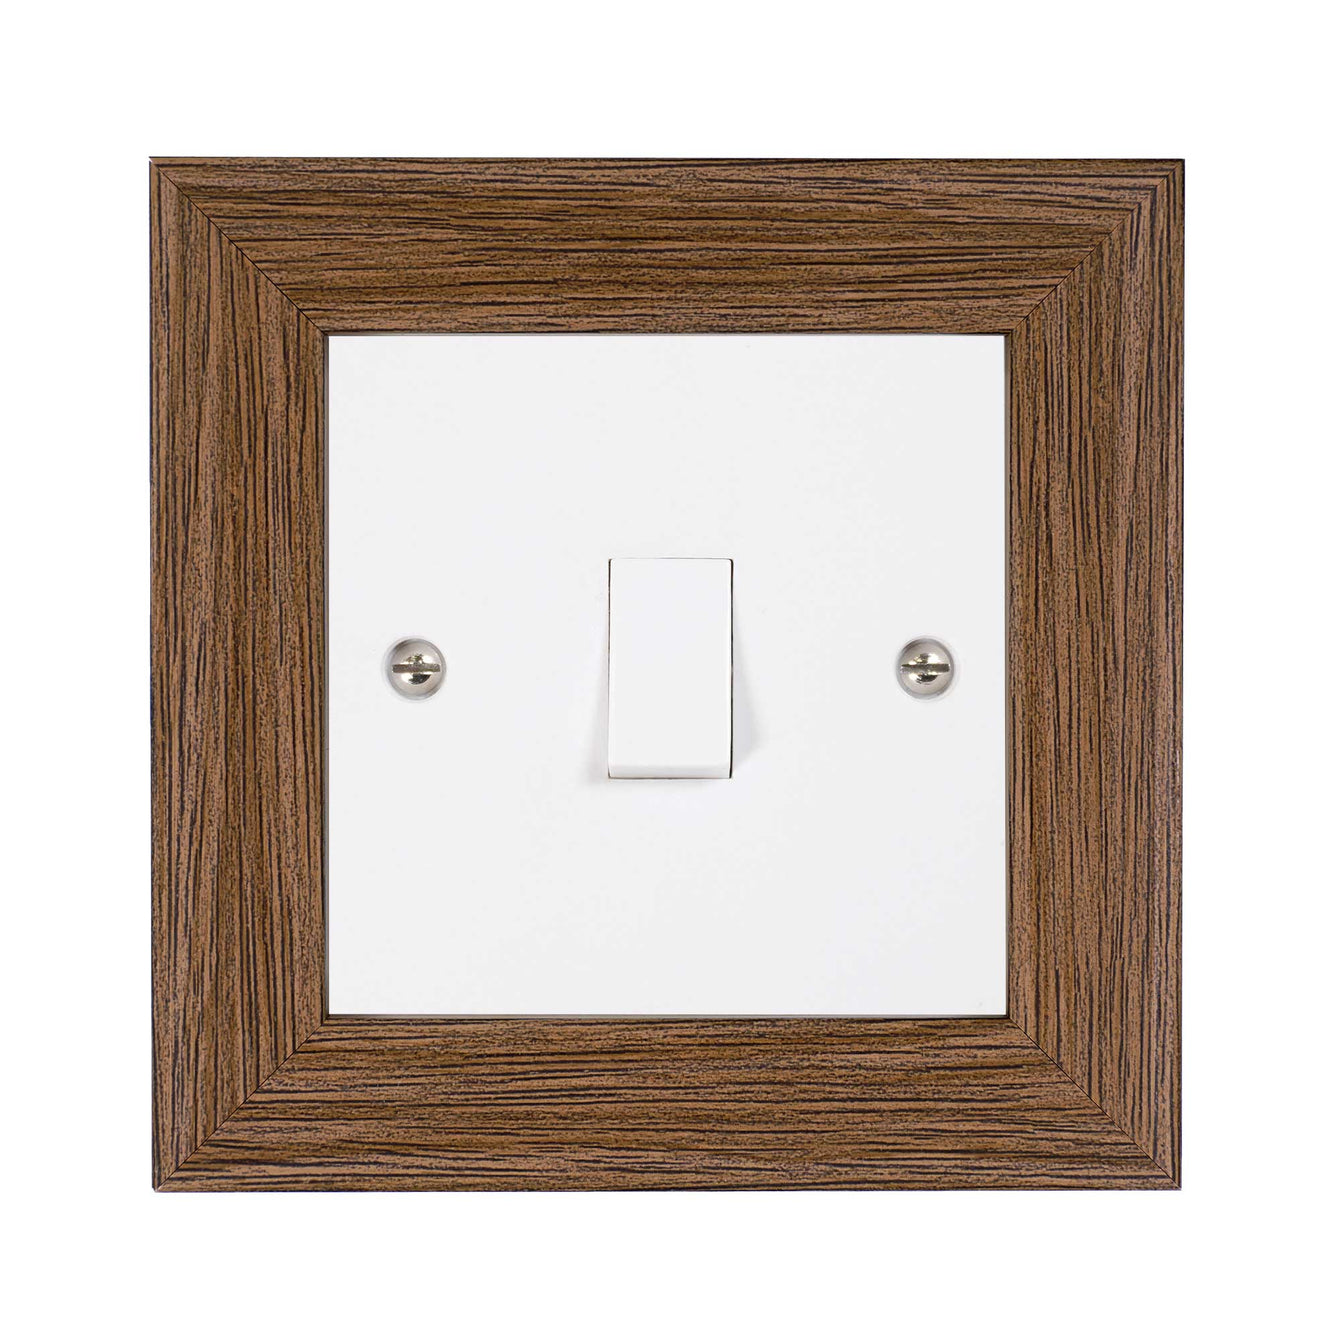 ElekTek Decorative Switch Surround Frame Cover Finger Plate Modena Dark Wood Effects 